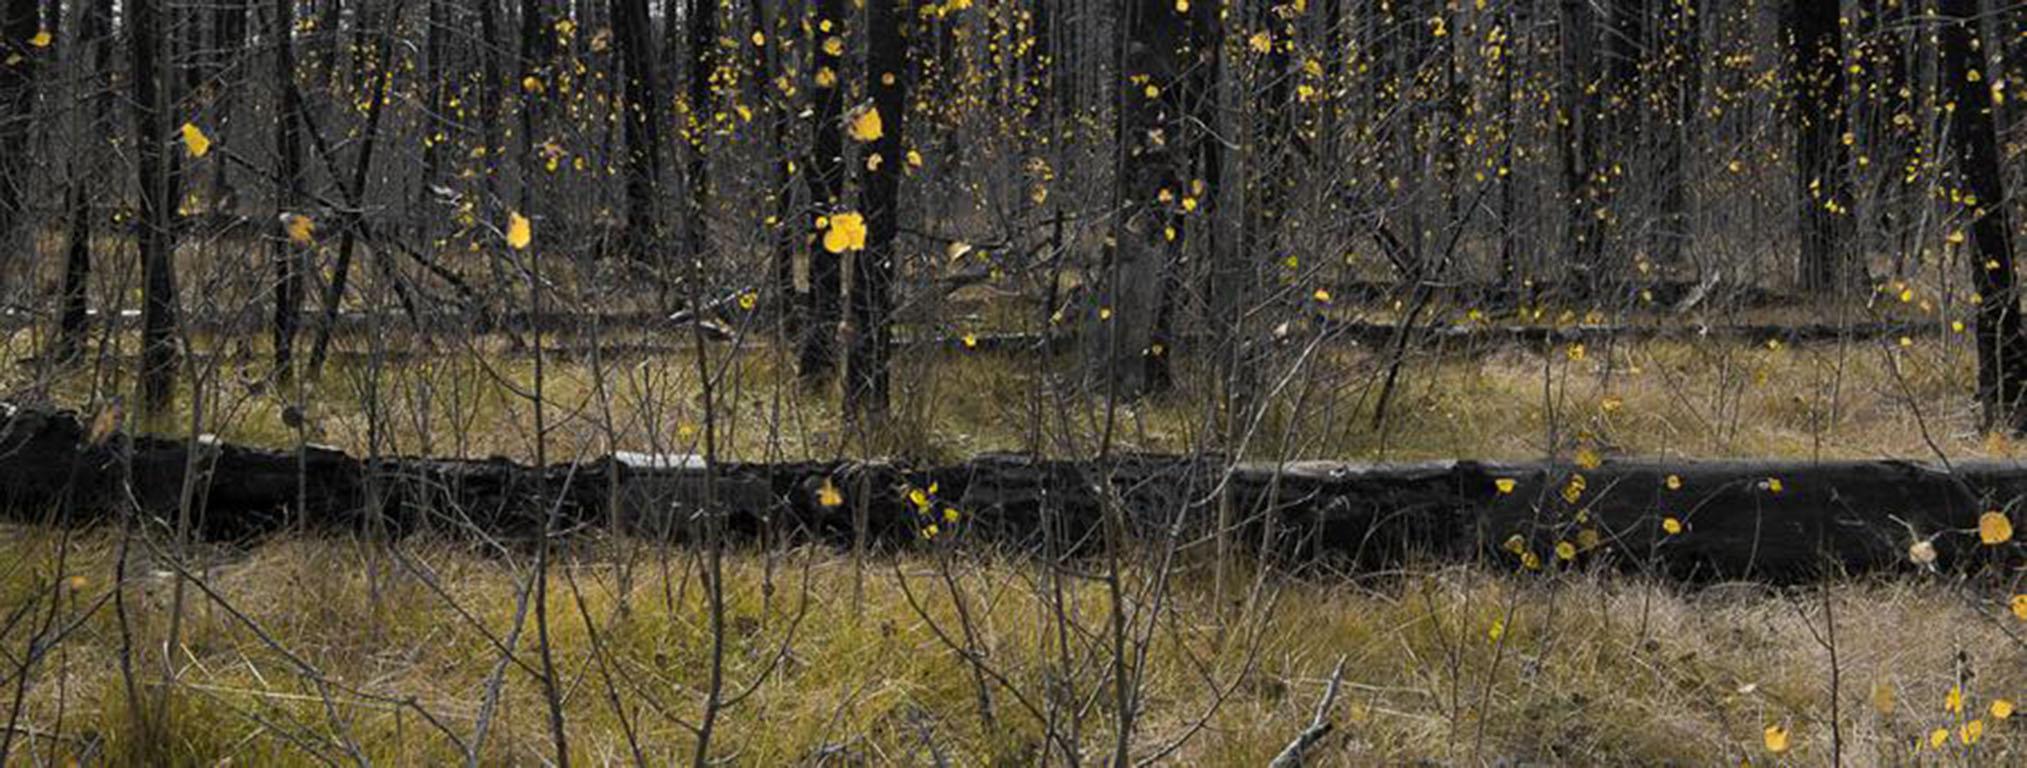 Patricia Galagan Landscape Photograph - The Fall 